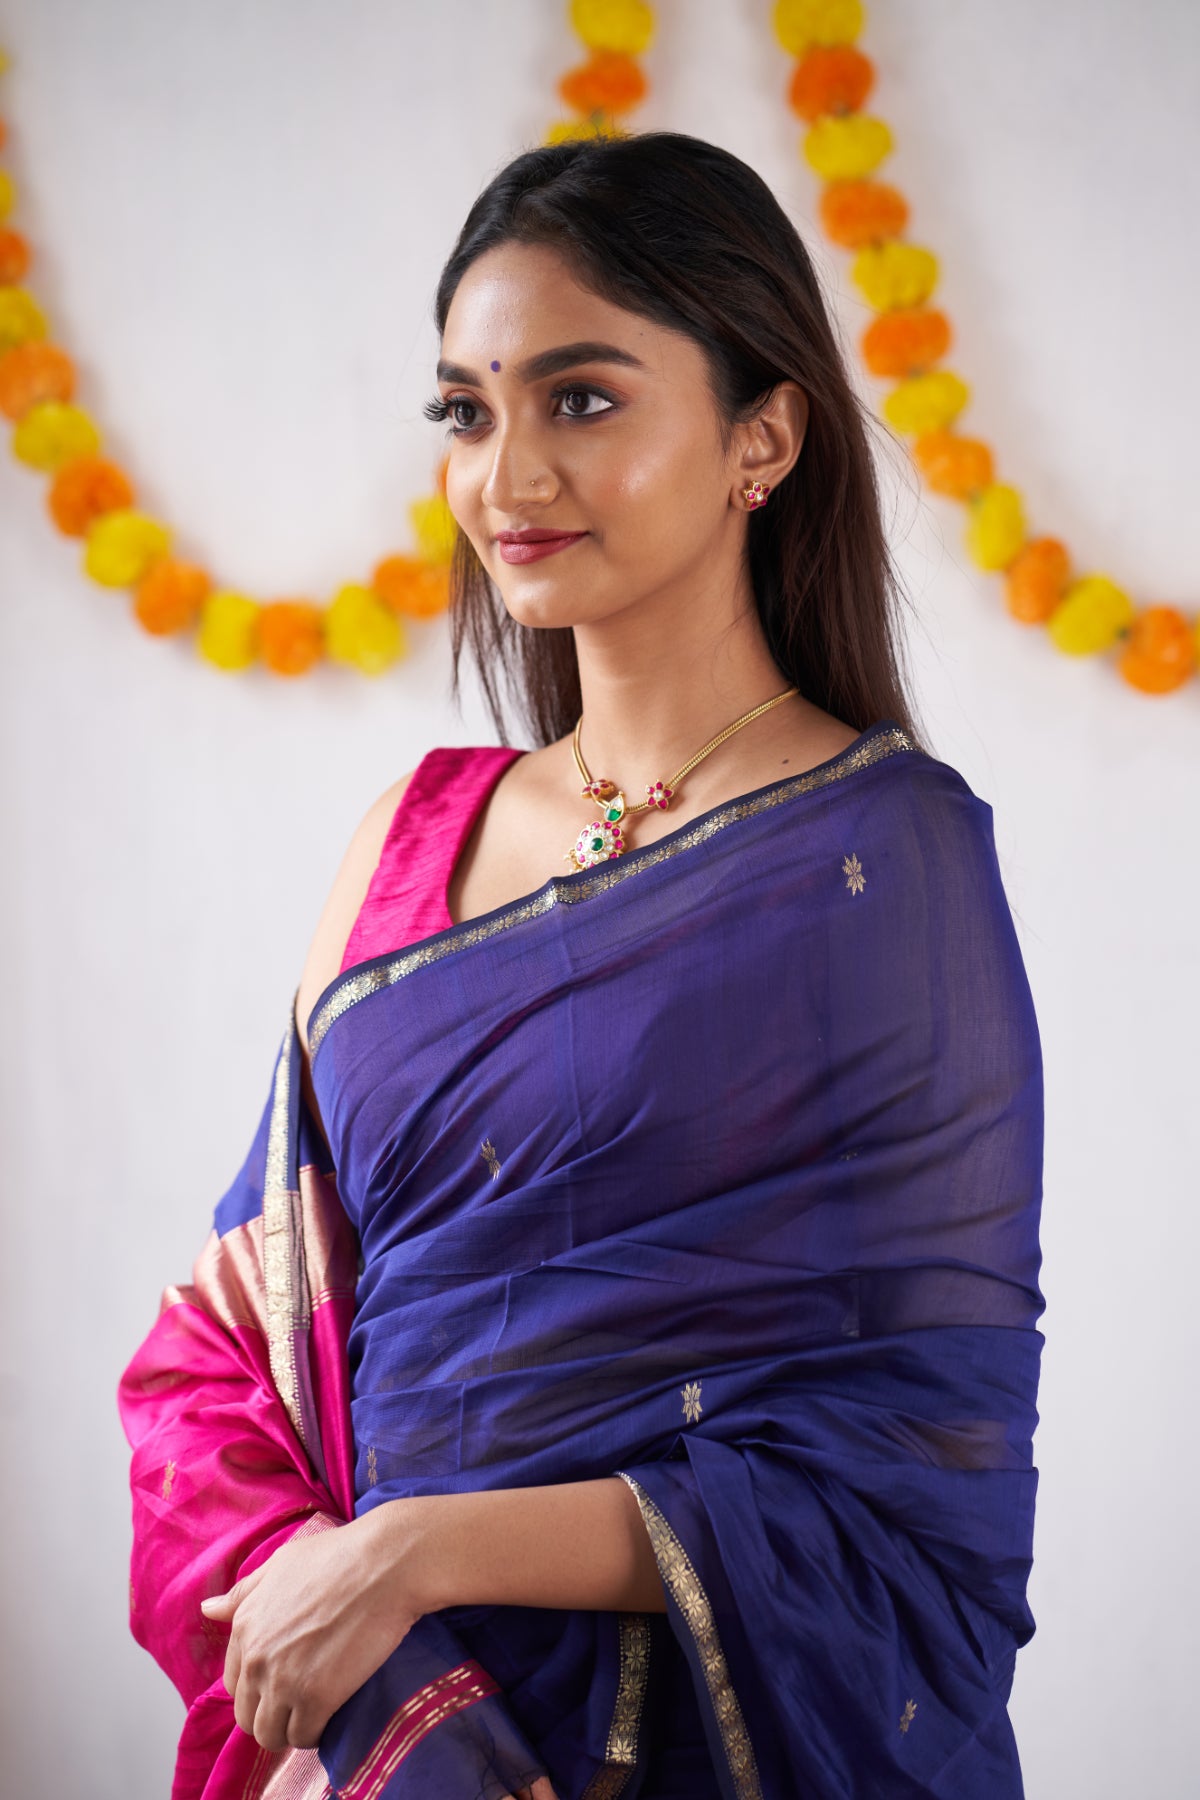 Rashmi Anpat - When unsure, wear a saree!😊 . #blue #saree #cotton #fav  #instagram #rashmianpat #post #upload #style #marathi #tradition #pose  #wood #door #pattern #light #shadow #beam #blessed #godisgreat #happy  #positive #vibes #